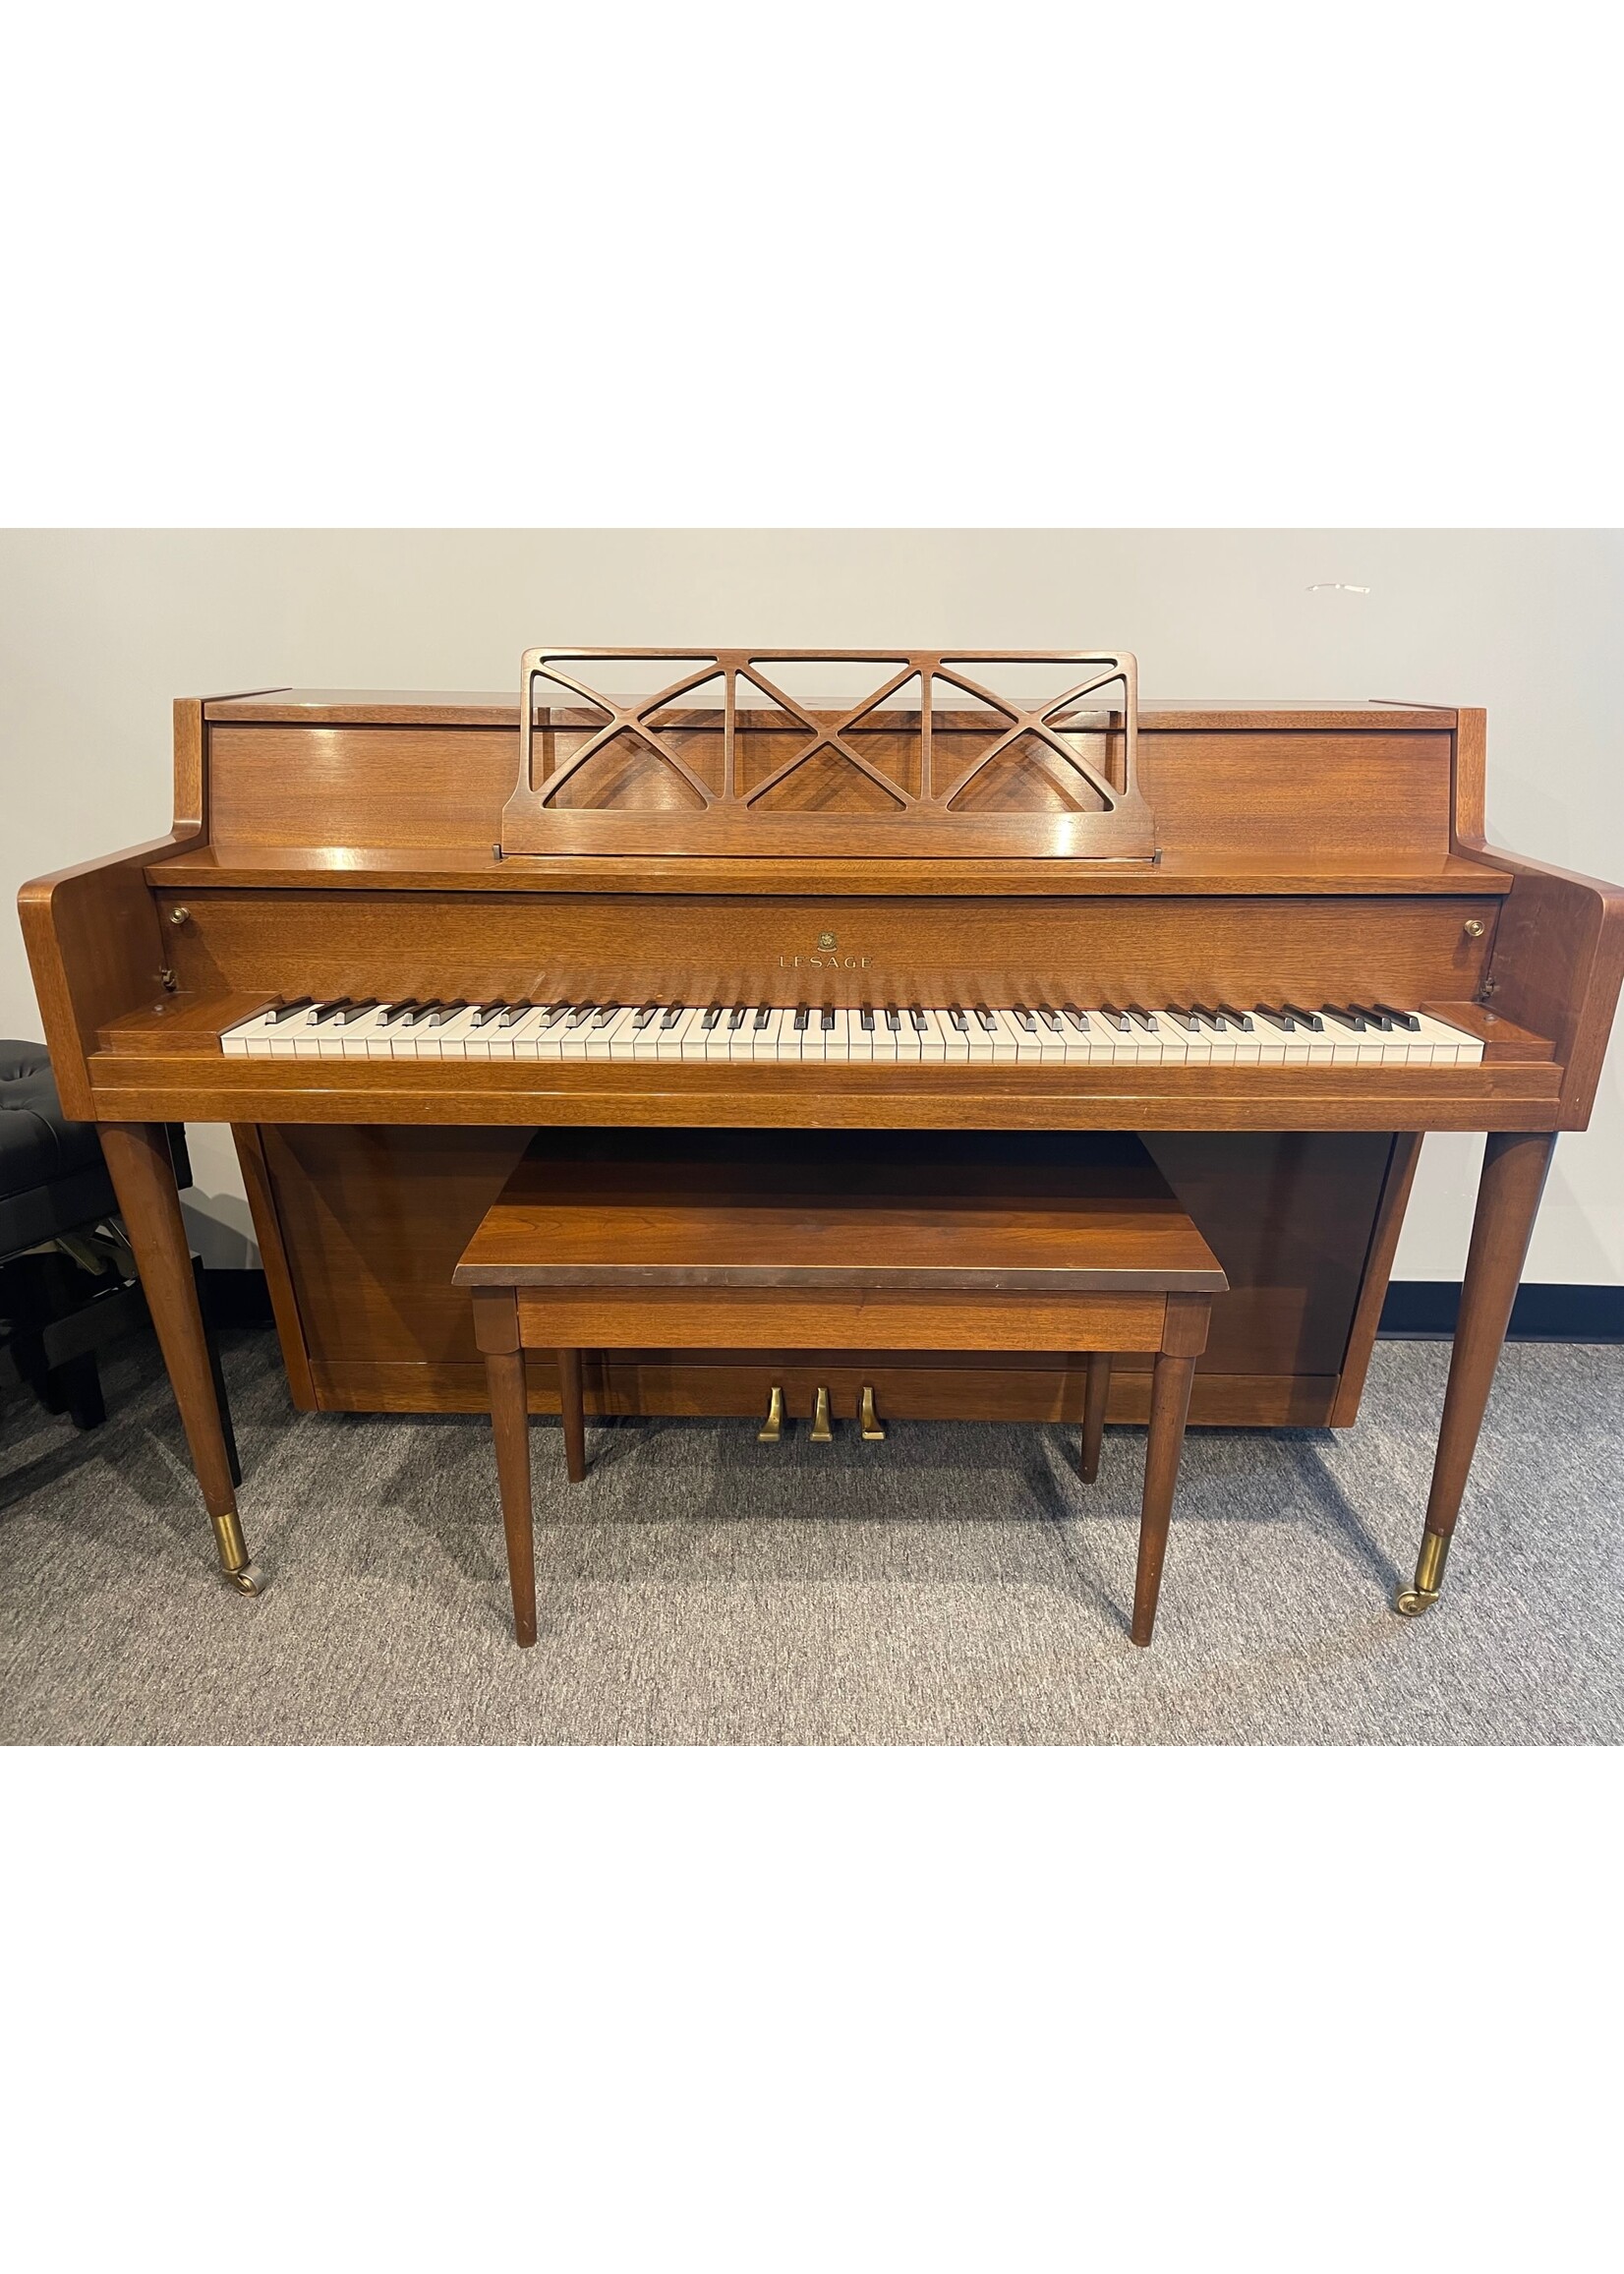 Lesage Pre-Owned Lesage Upright Piano 389 40" Walnut